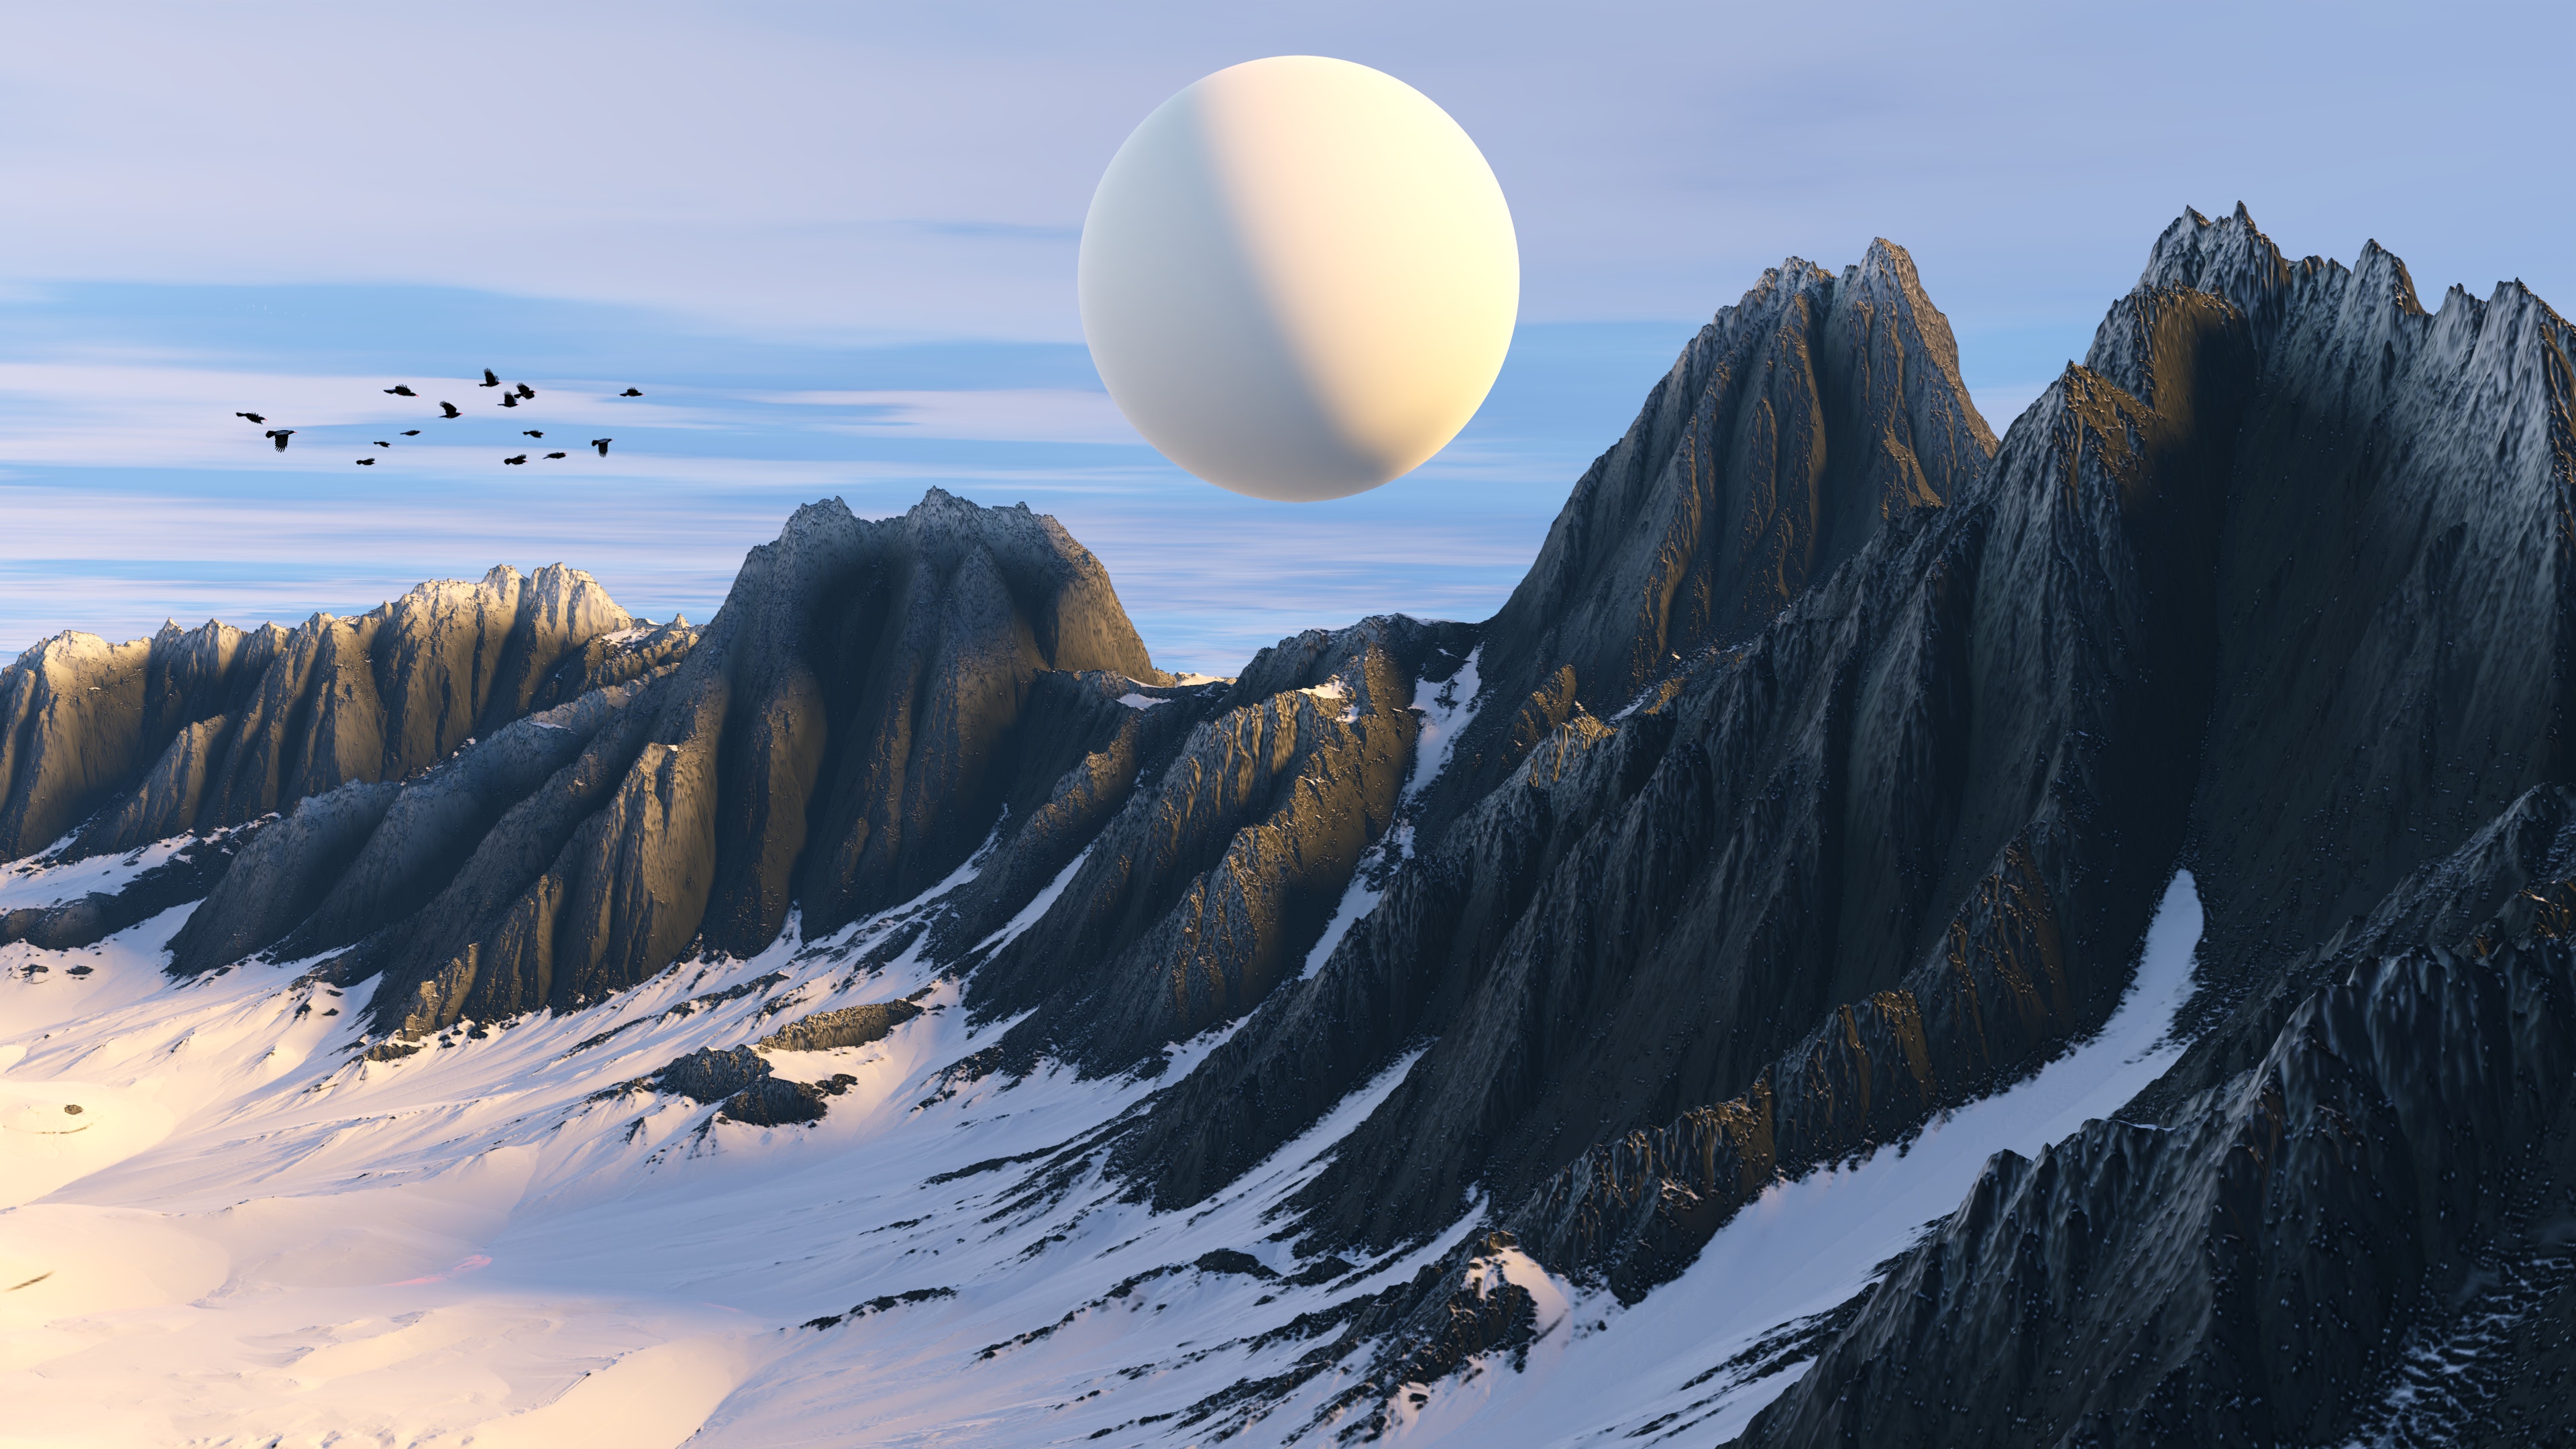 General 3840x2160 digital art artwork illustration mountains landscape snow planet abstract CGI nature birds